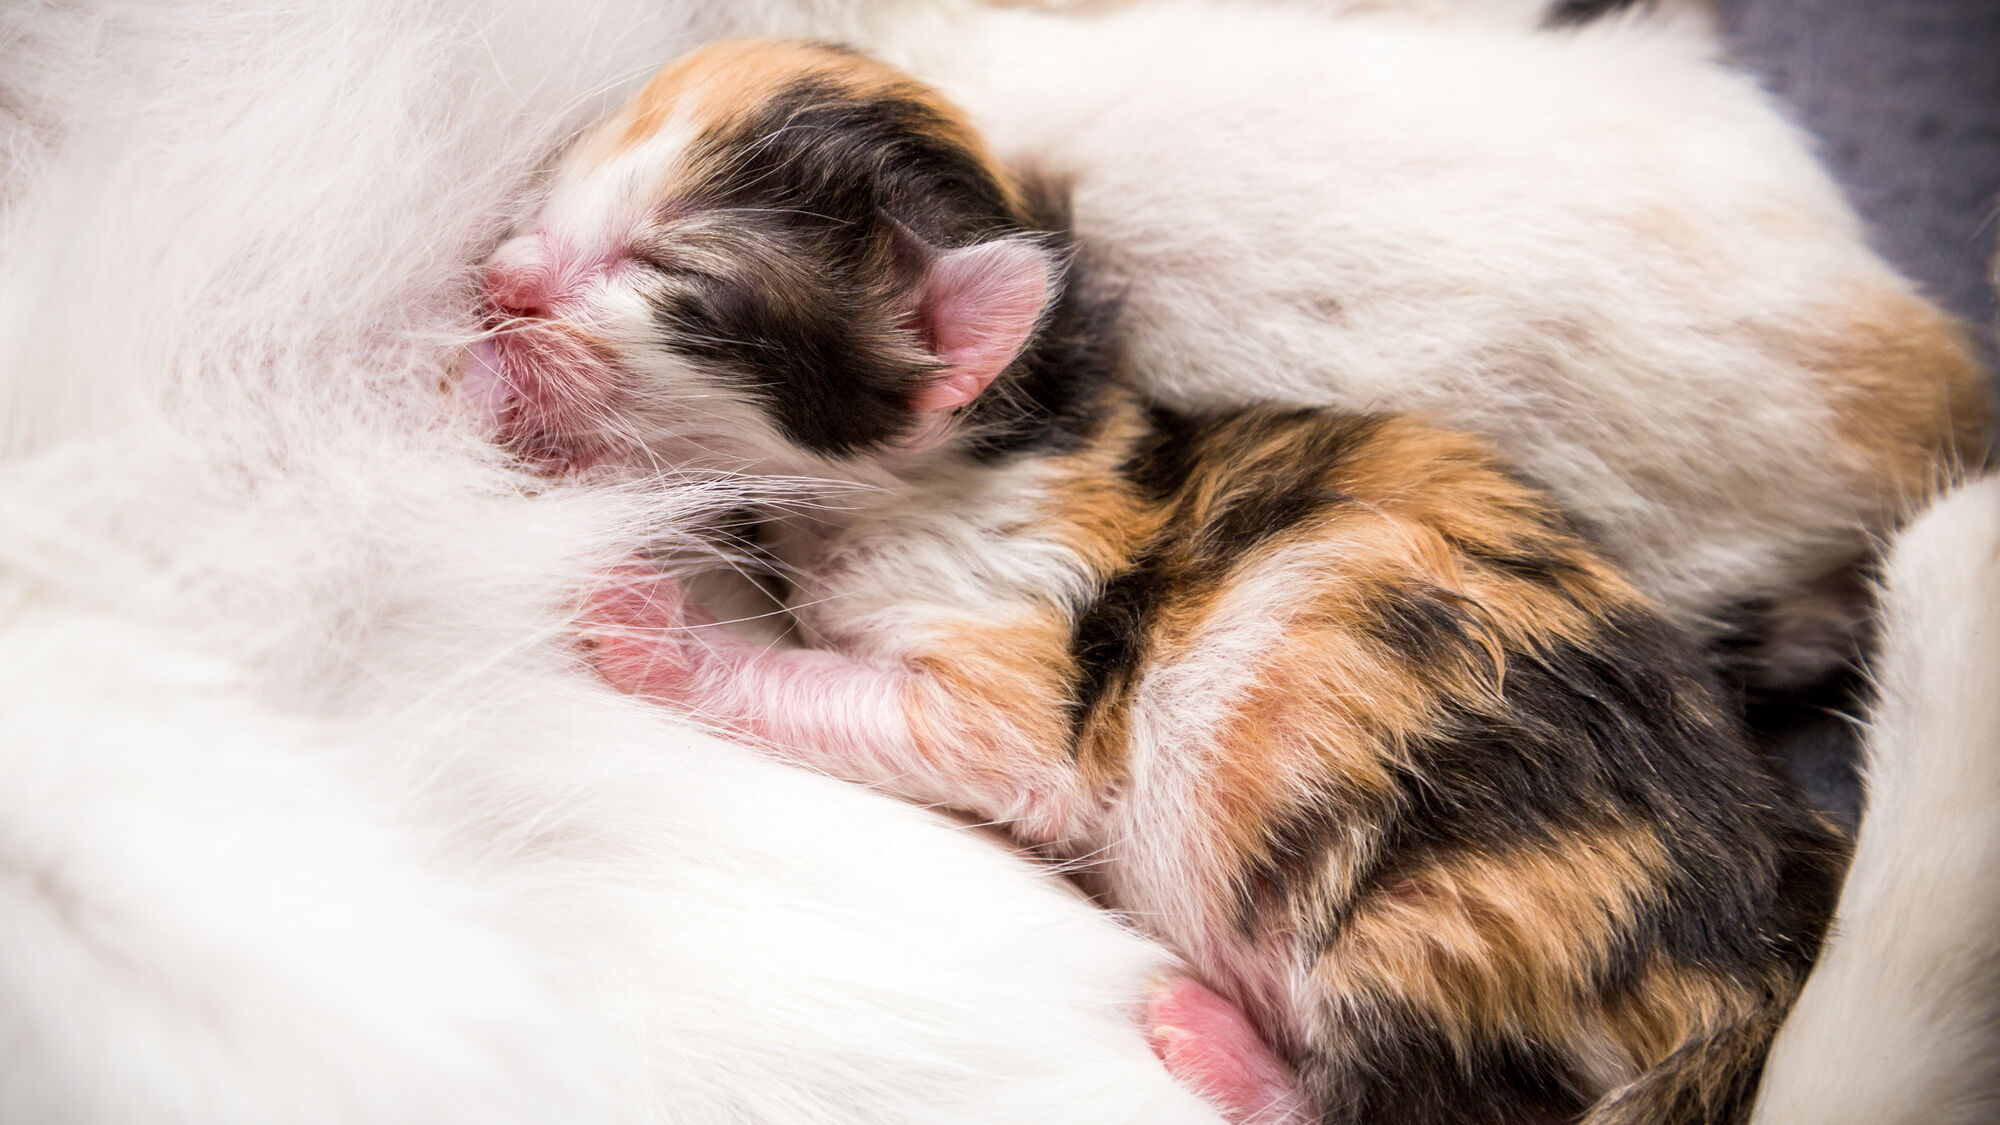 Newborn kitten suckling on mother